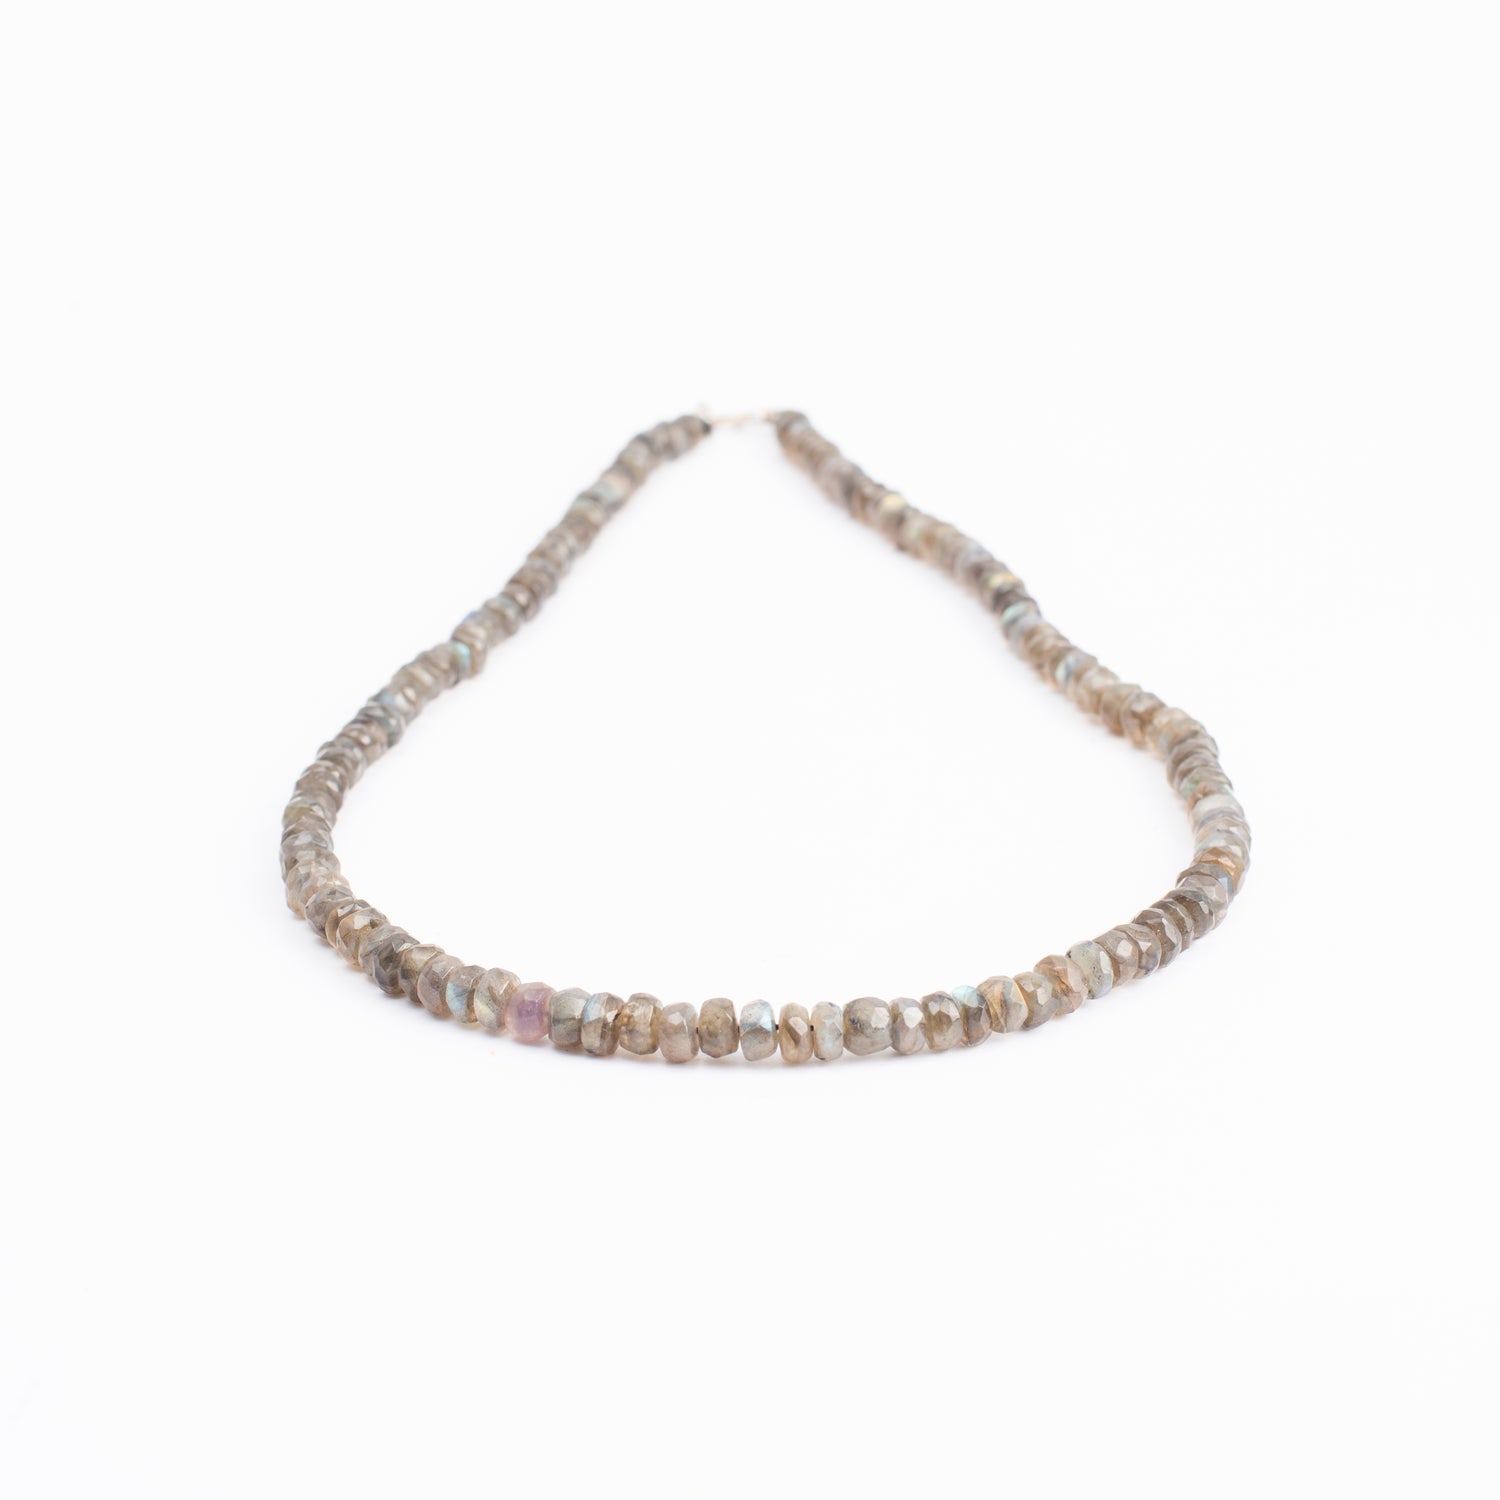 Labradorite Dark Shade Oval Cut Beads Necklace